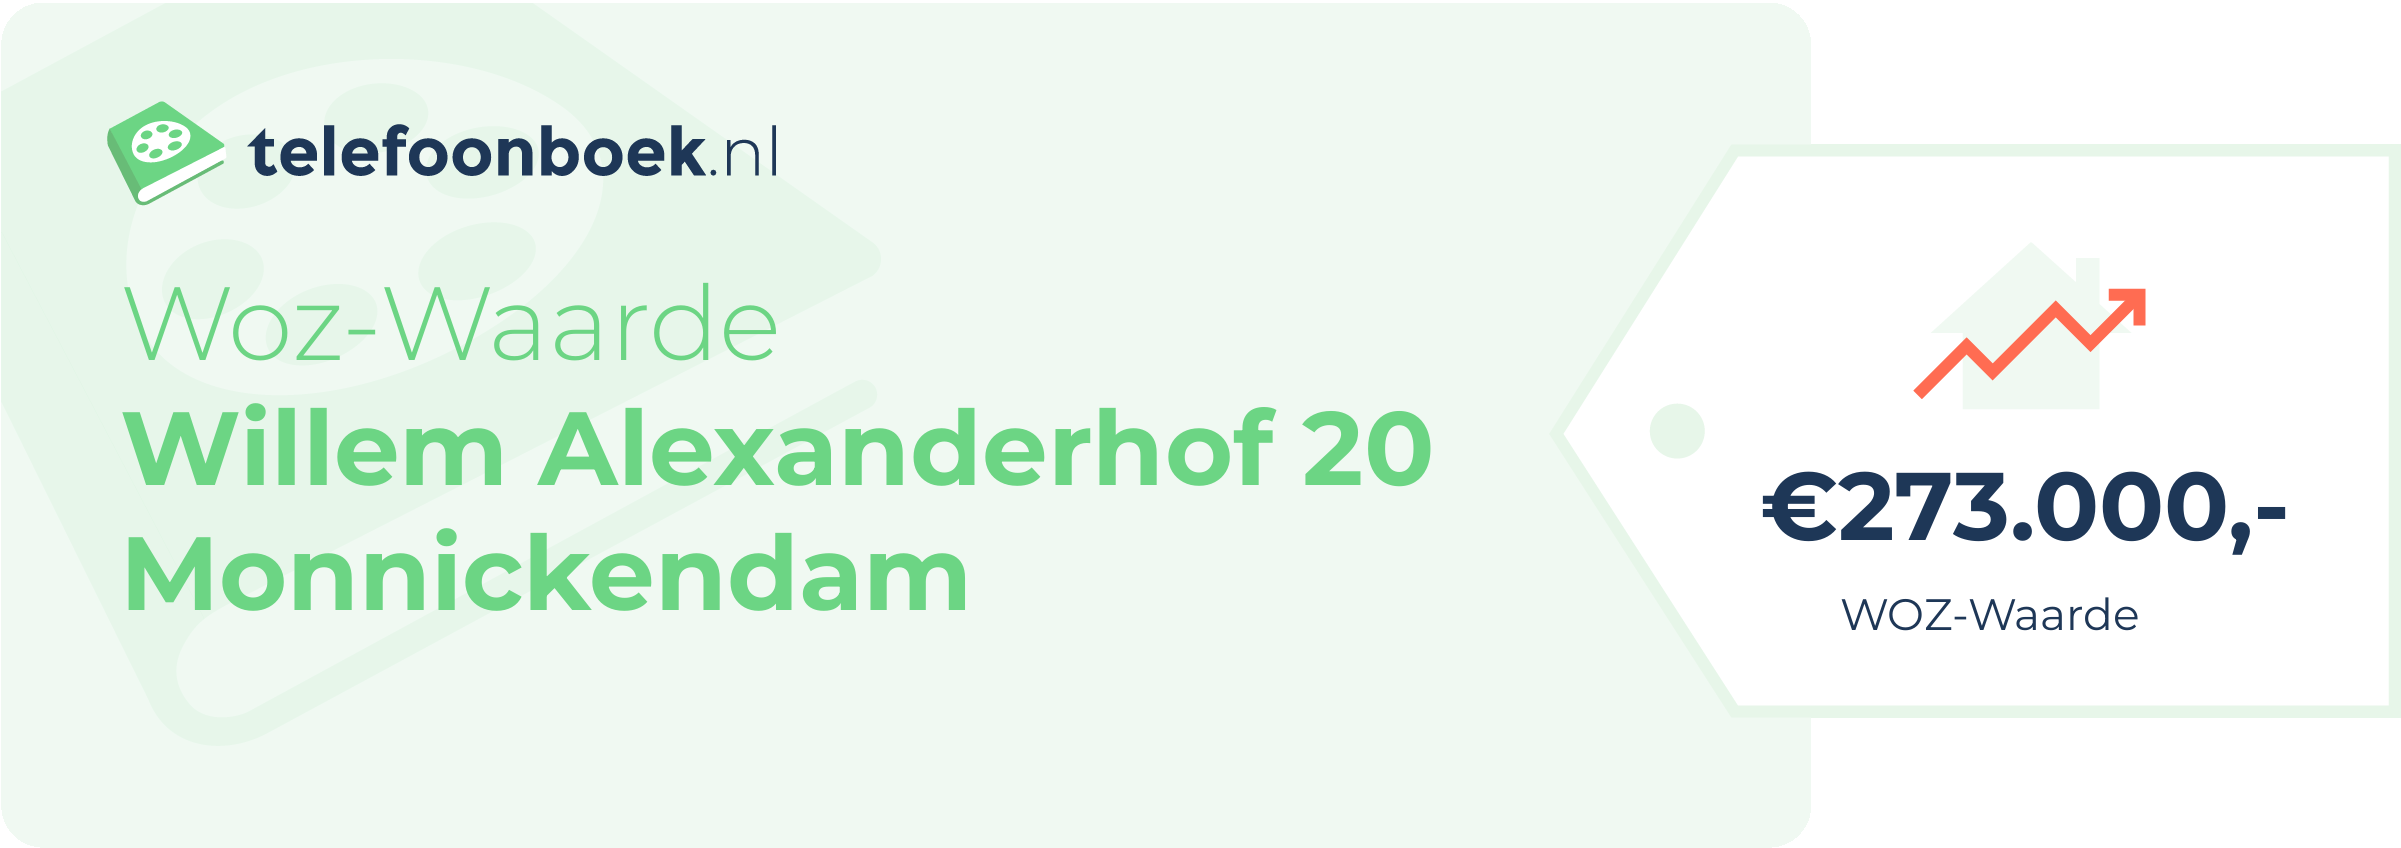 WOZ-waarde Willem Alexanderhof 20 Monnickendam